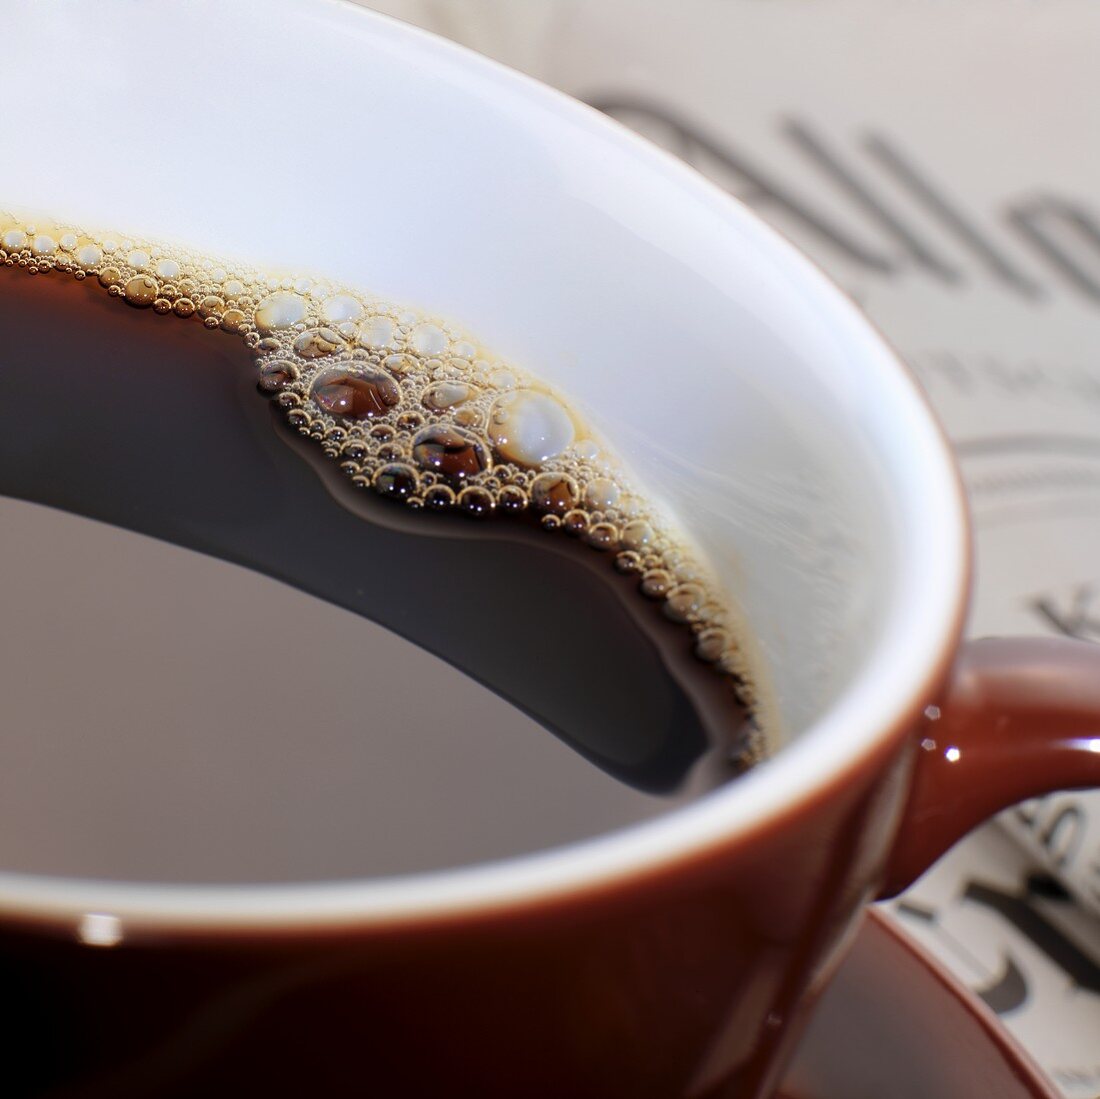 Cup of espresso (close-up)